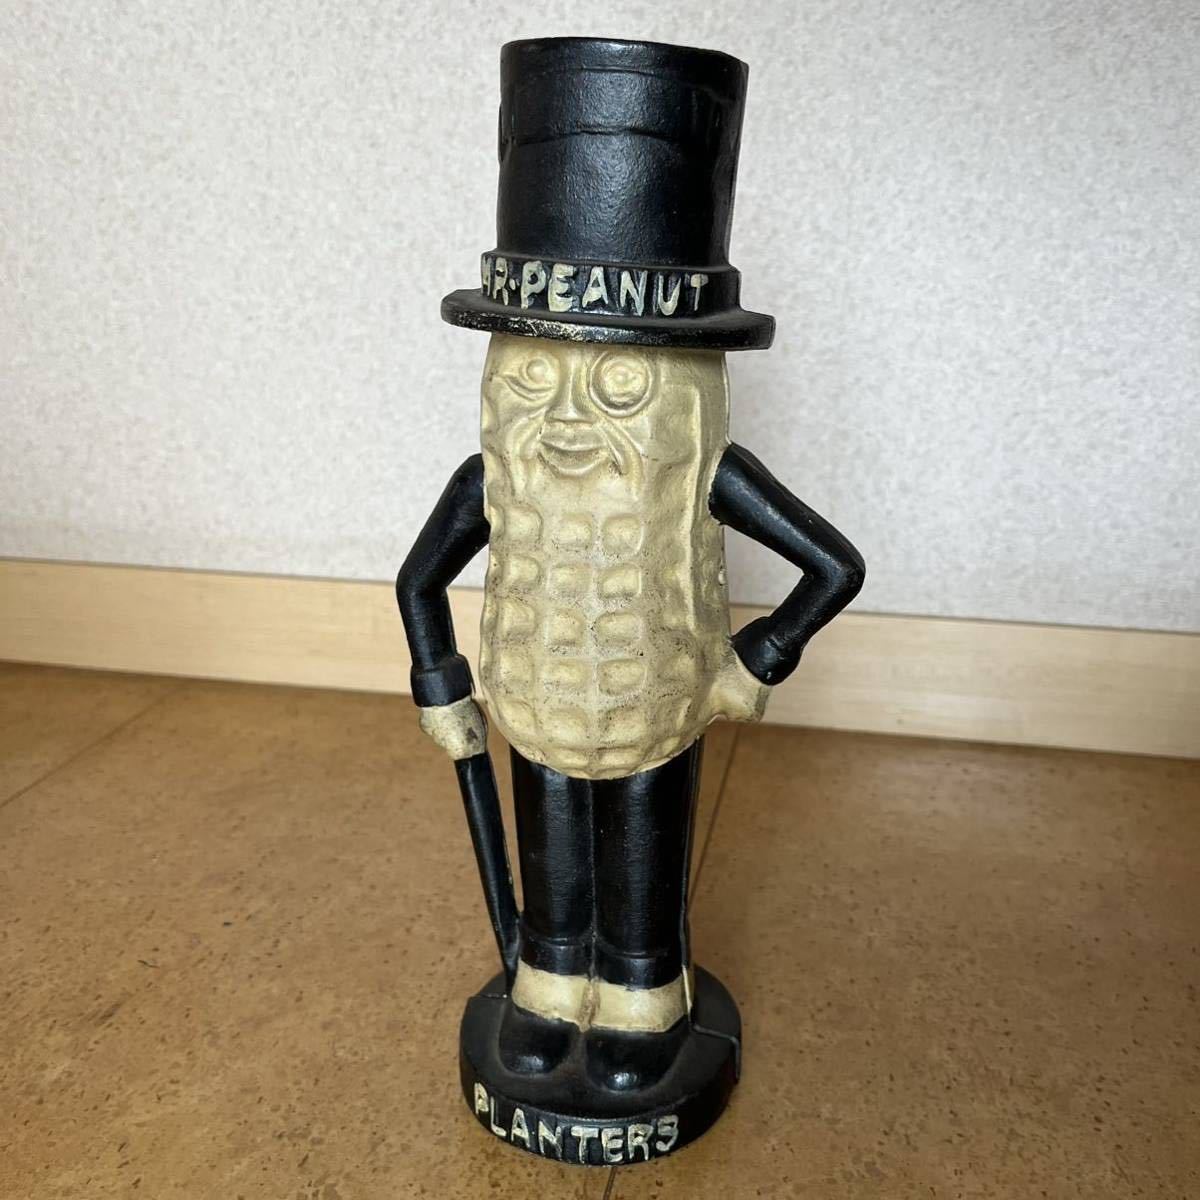 Mr. peanut キャストアイアン 貯金箱 ヴィンテージ / Mr.peanut Cast Iron Coin Bank Vintage